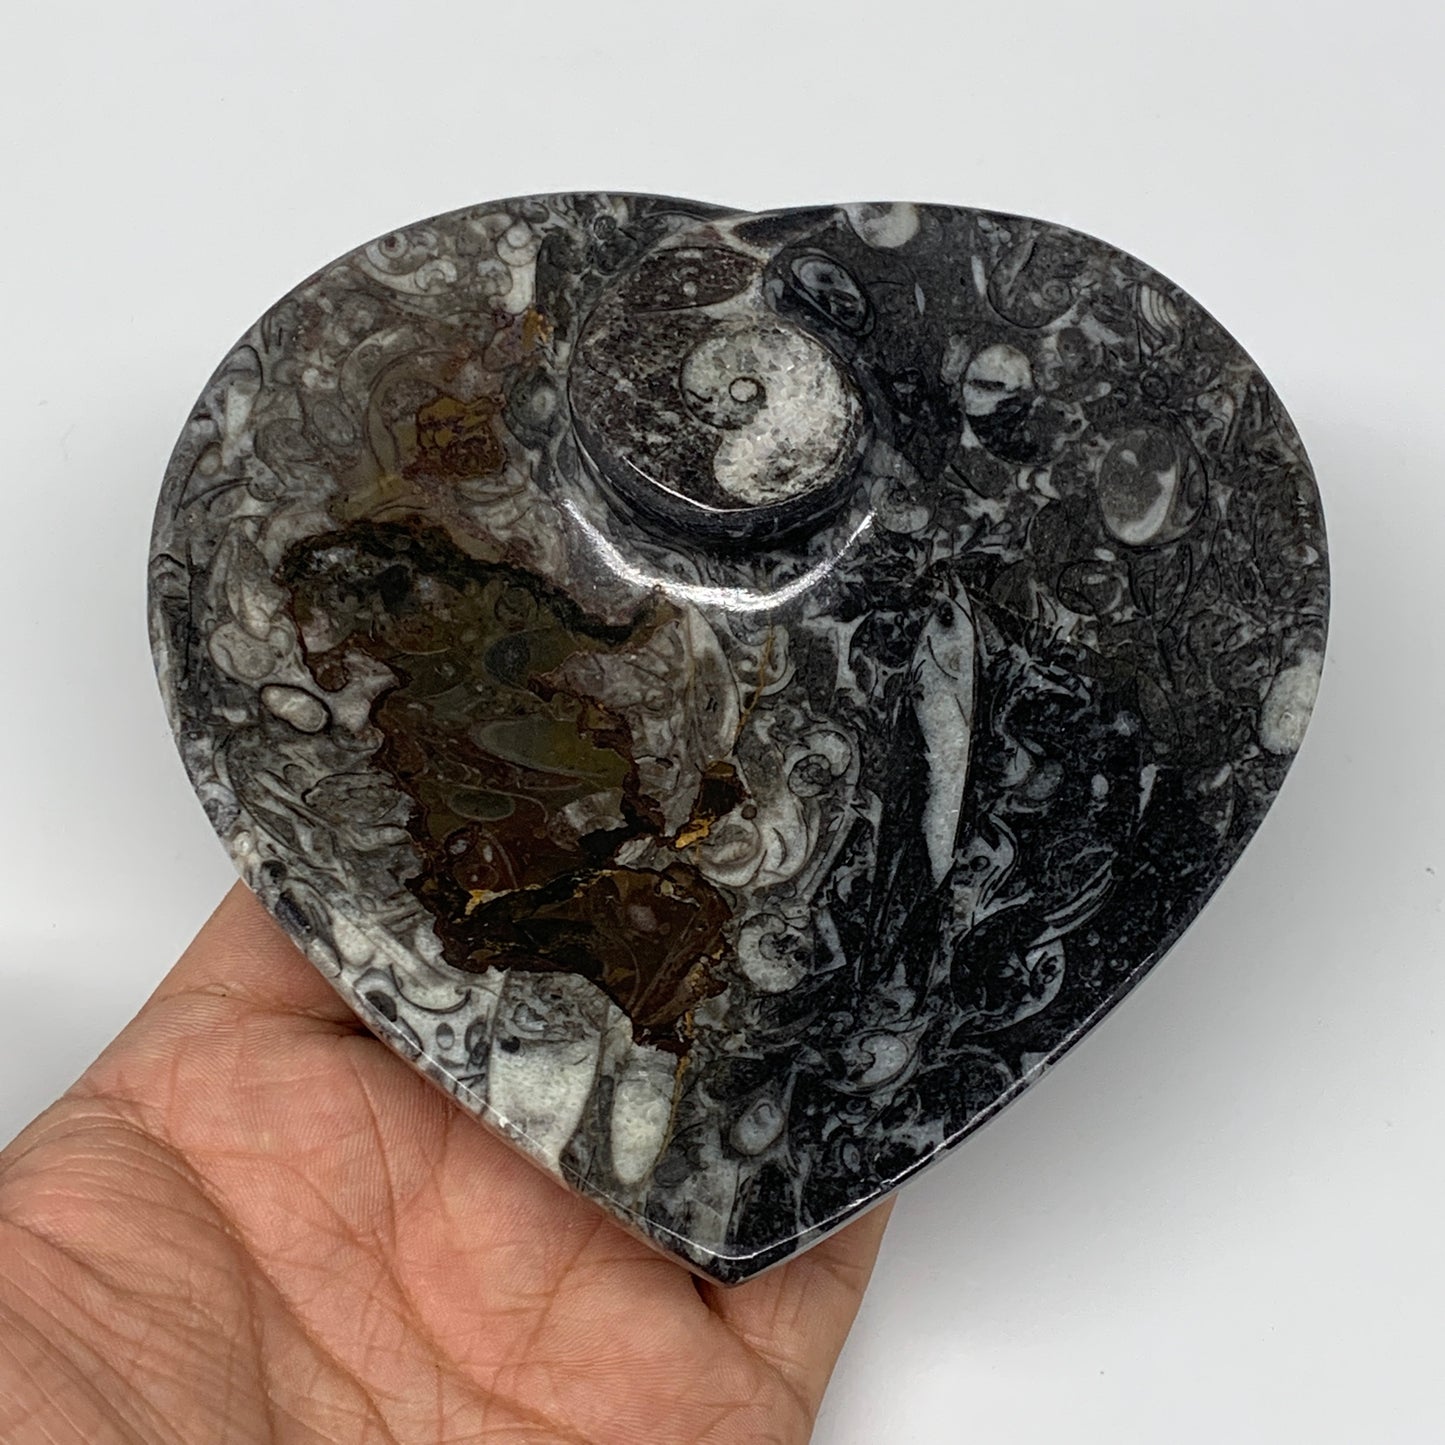 4Pcs, 4.8"x4.7" Small Heart Fossils Orthoceras Ammonite Bowls @Morocco, B8791